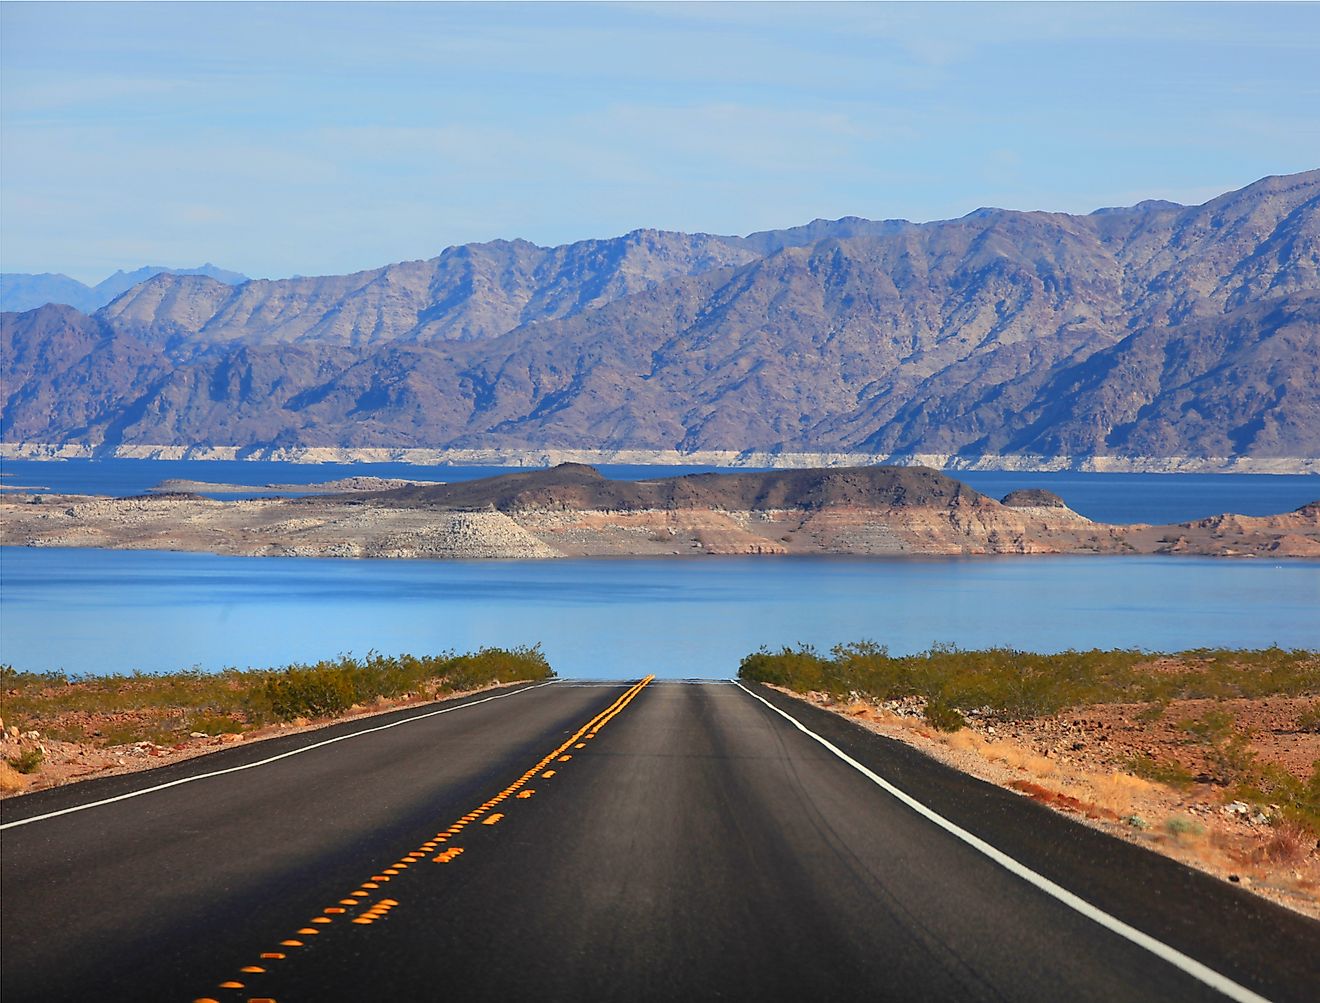 Lake Mead Scenic Drive- Image Credit SNEHIT PHOTO via Shutterstock